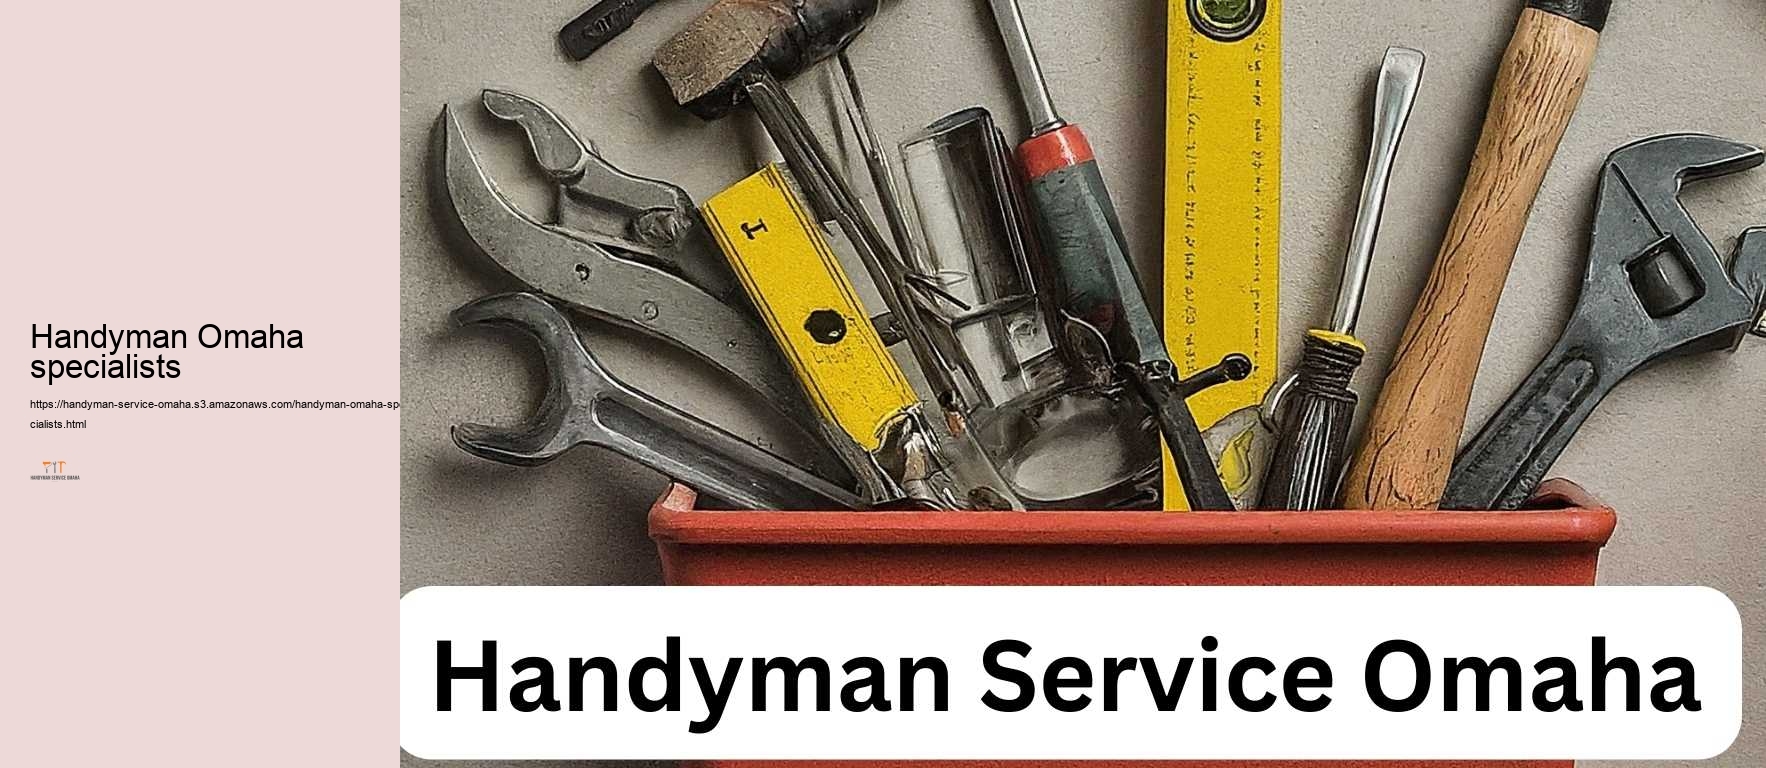 Handyman Omaha specialists